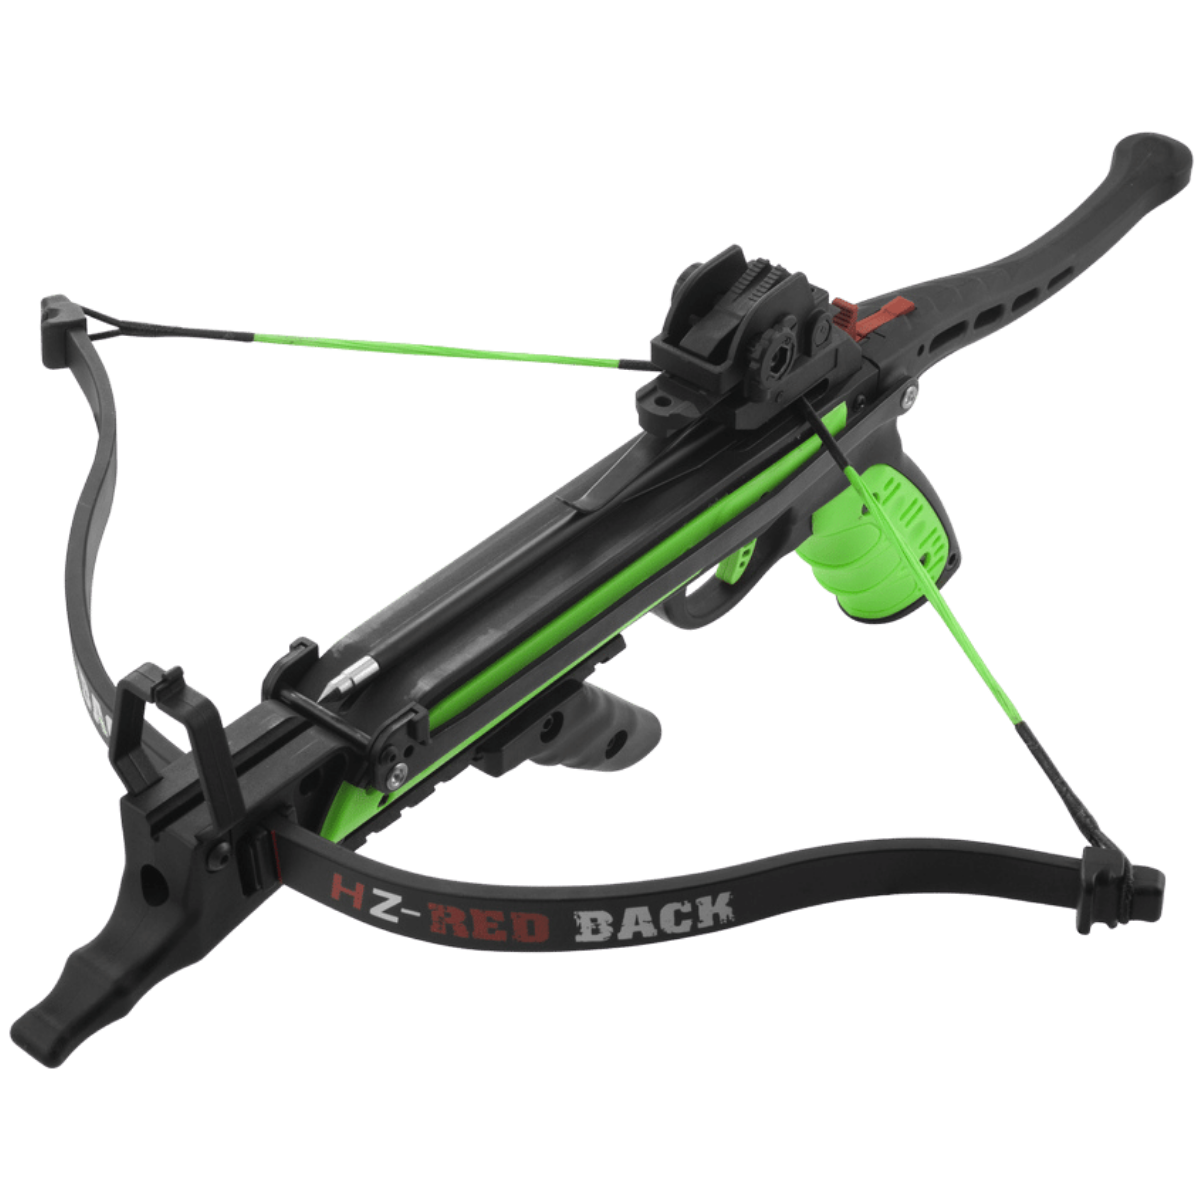 Hori-Zone Redback RTS Pistol Crossbow 80lb - Green/Black - Fast UK Shipping | Tactical Archery UK